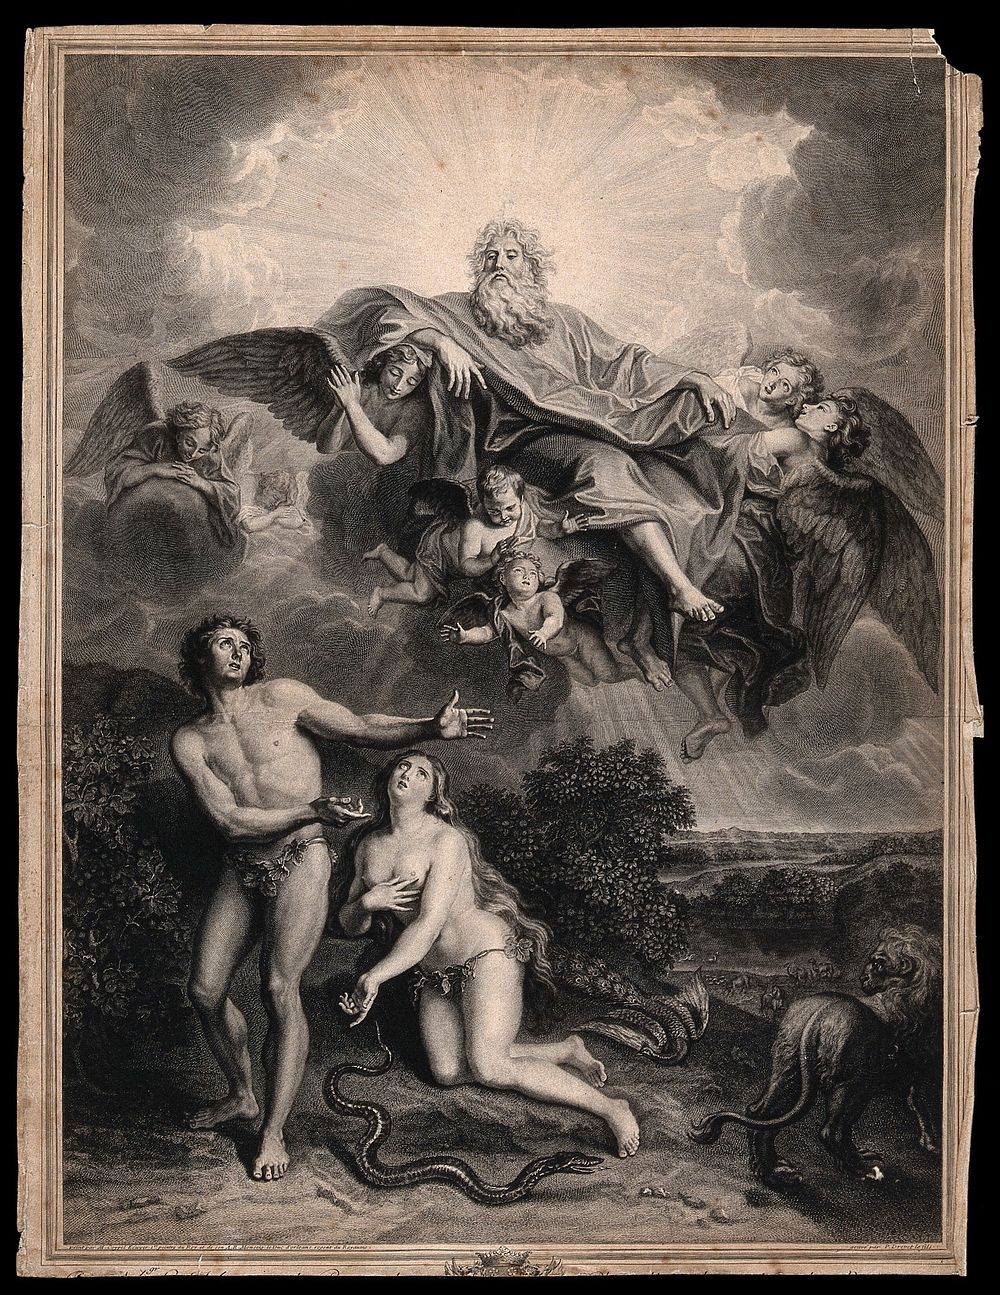 God looks on unimpressed as Adam blames Eve for the transgression. Engraving by P.I. Drevet, c. 1720, after N. Coypel.